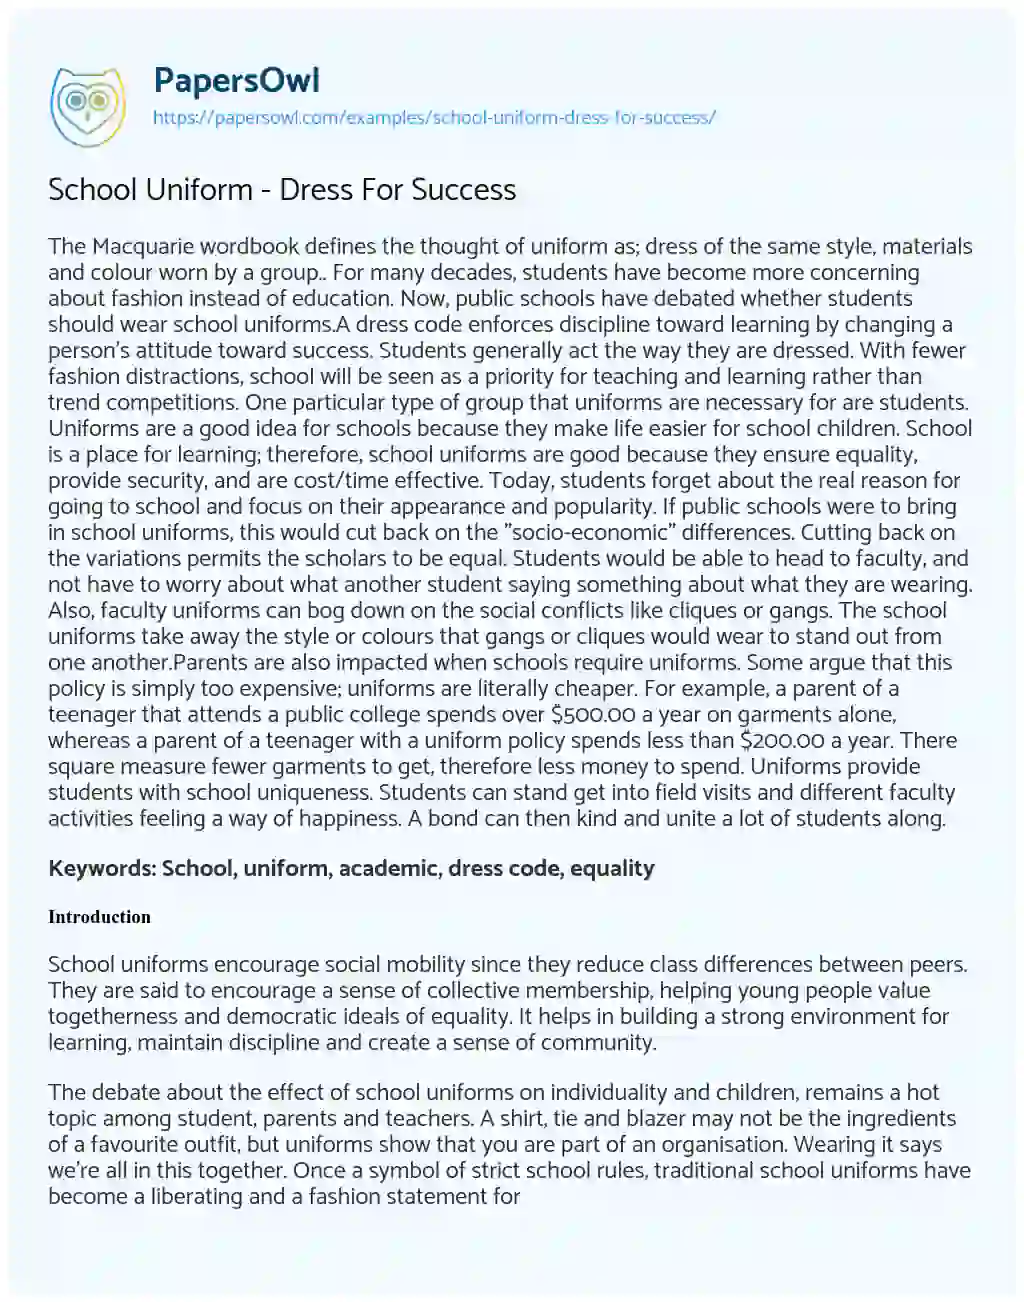 Essay on School Uniform – Dress for Success